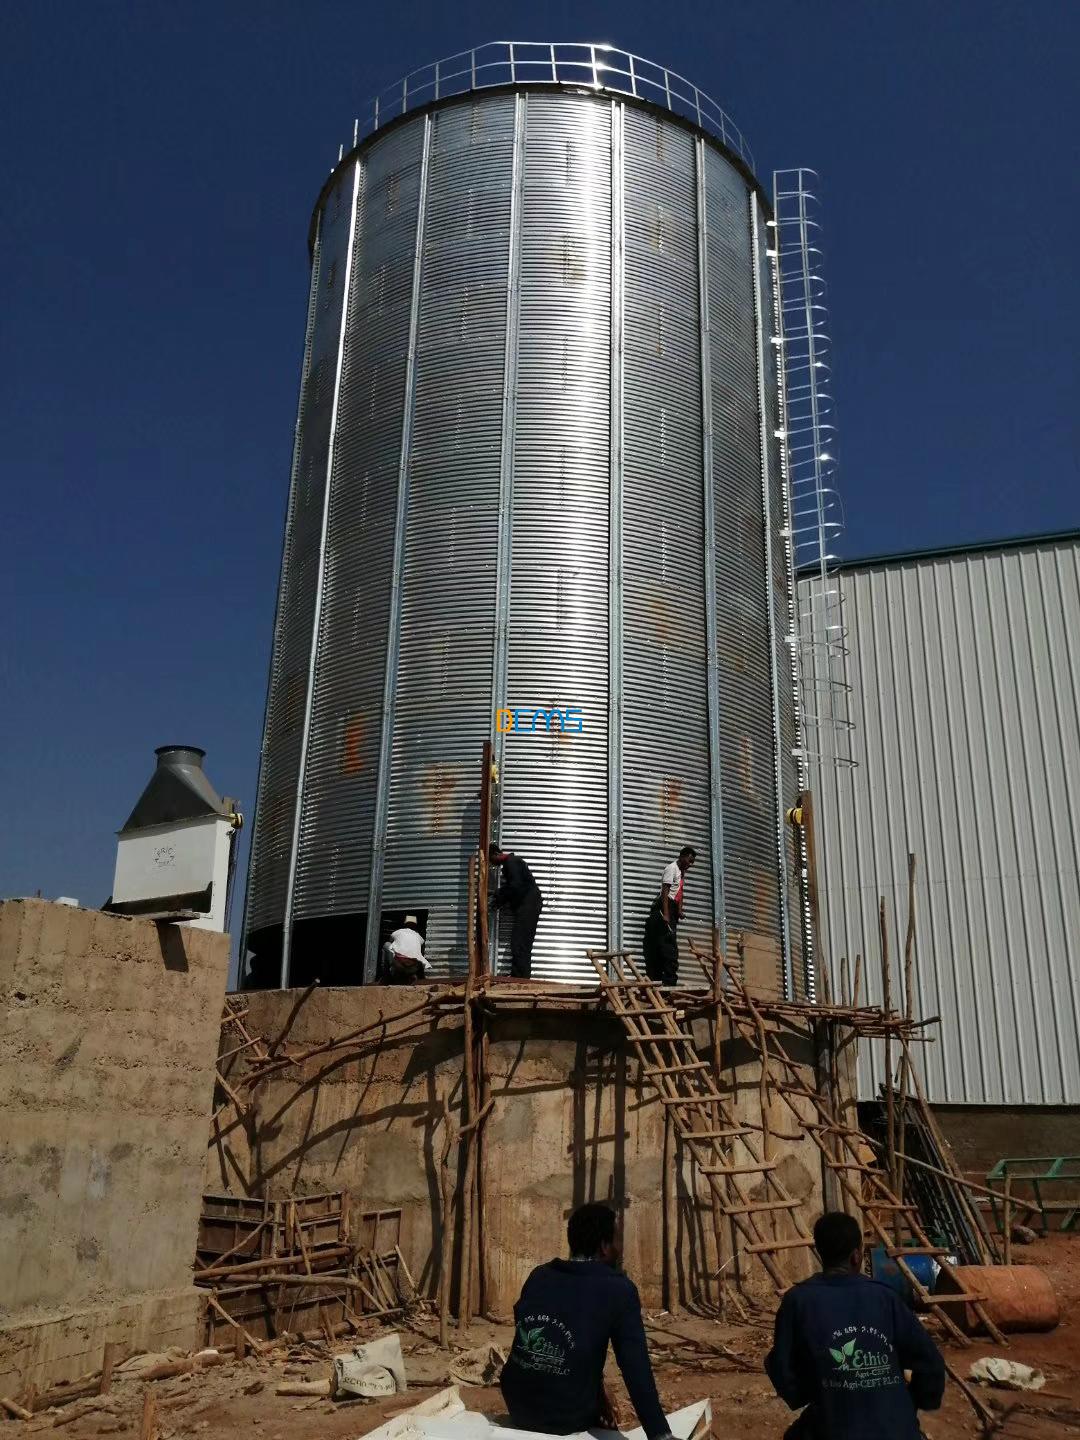 silo for maize storage